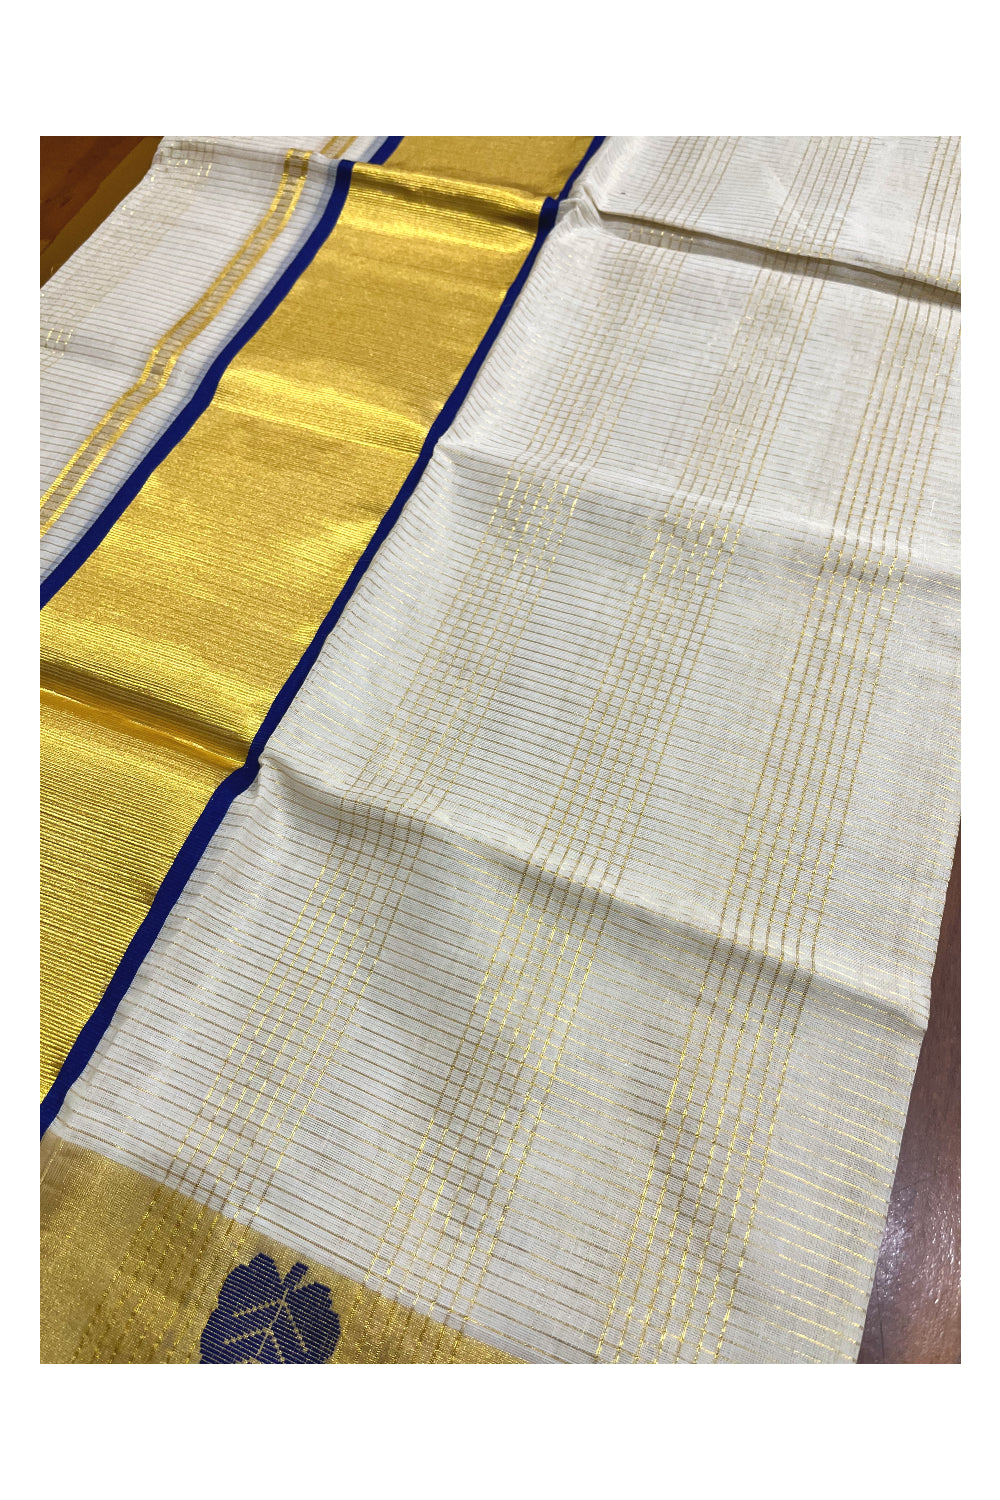 Southloom Handloom Premium Cotton Kasavu Striped Set Mundu With Blue Leaf Woven Patterns (Mundum Neriyathum) 2.70 Mtrs